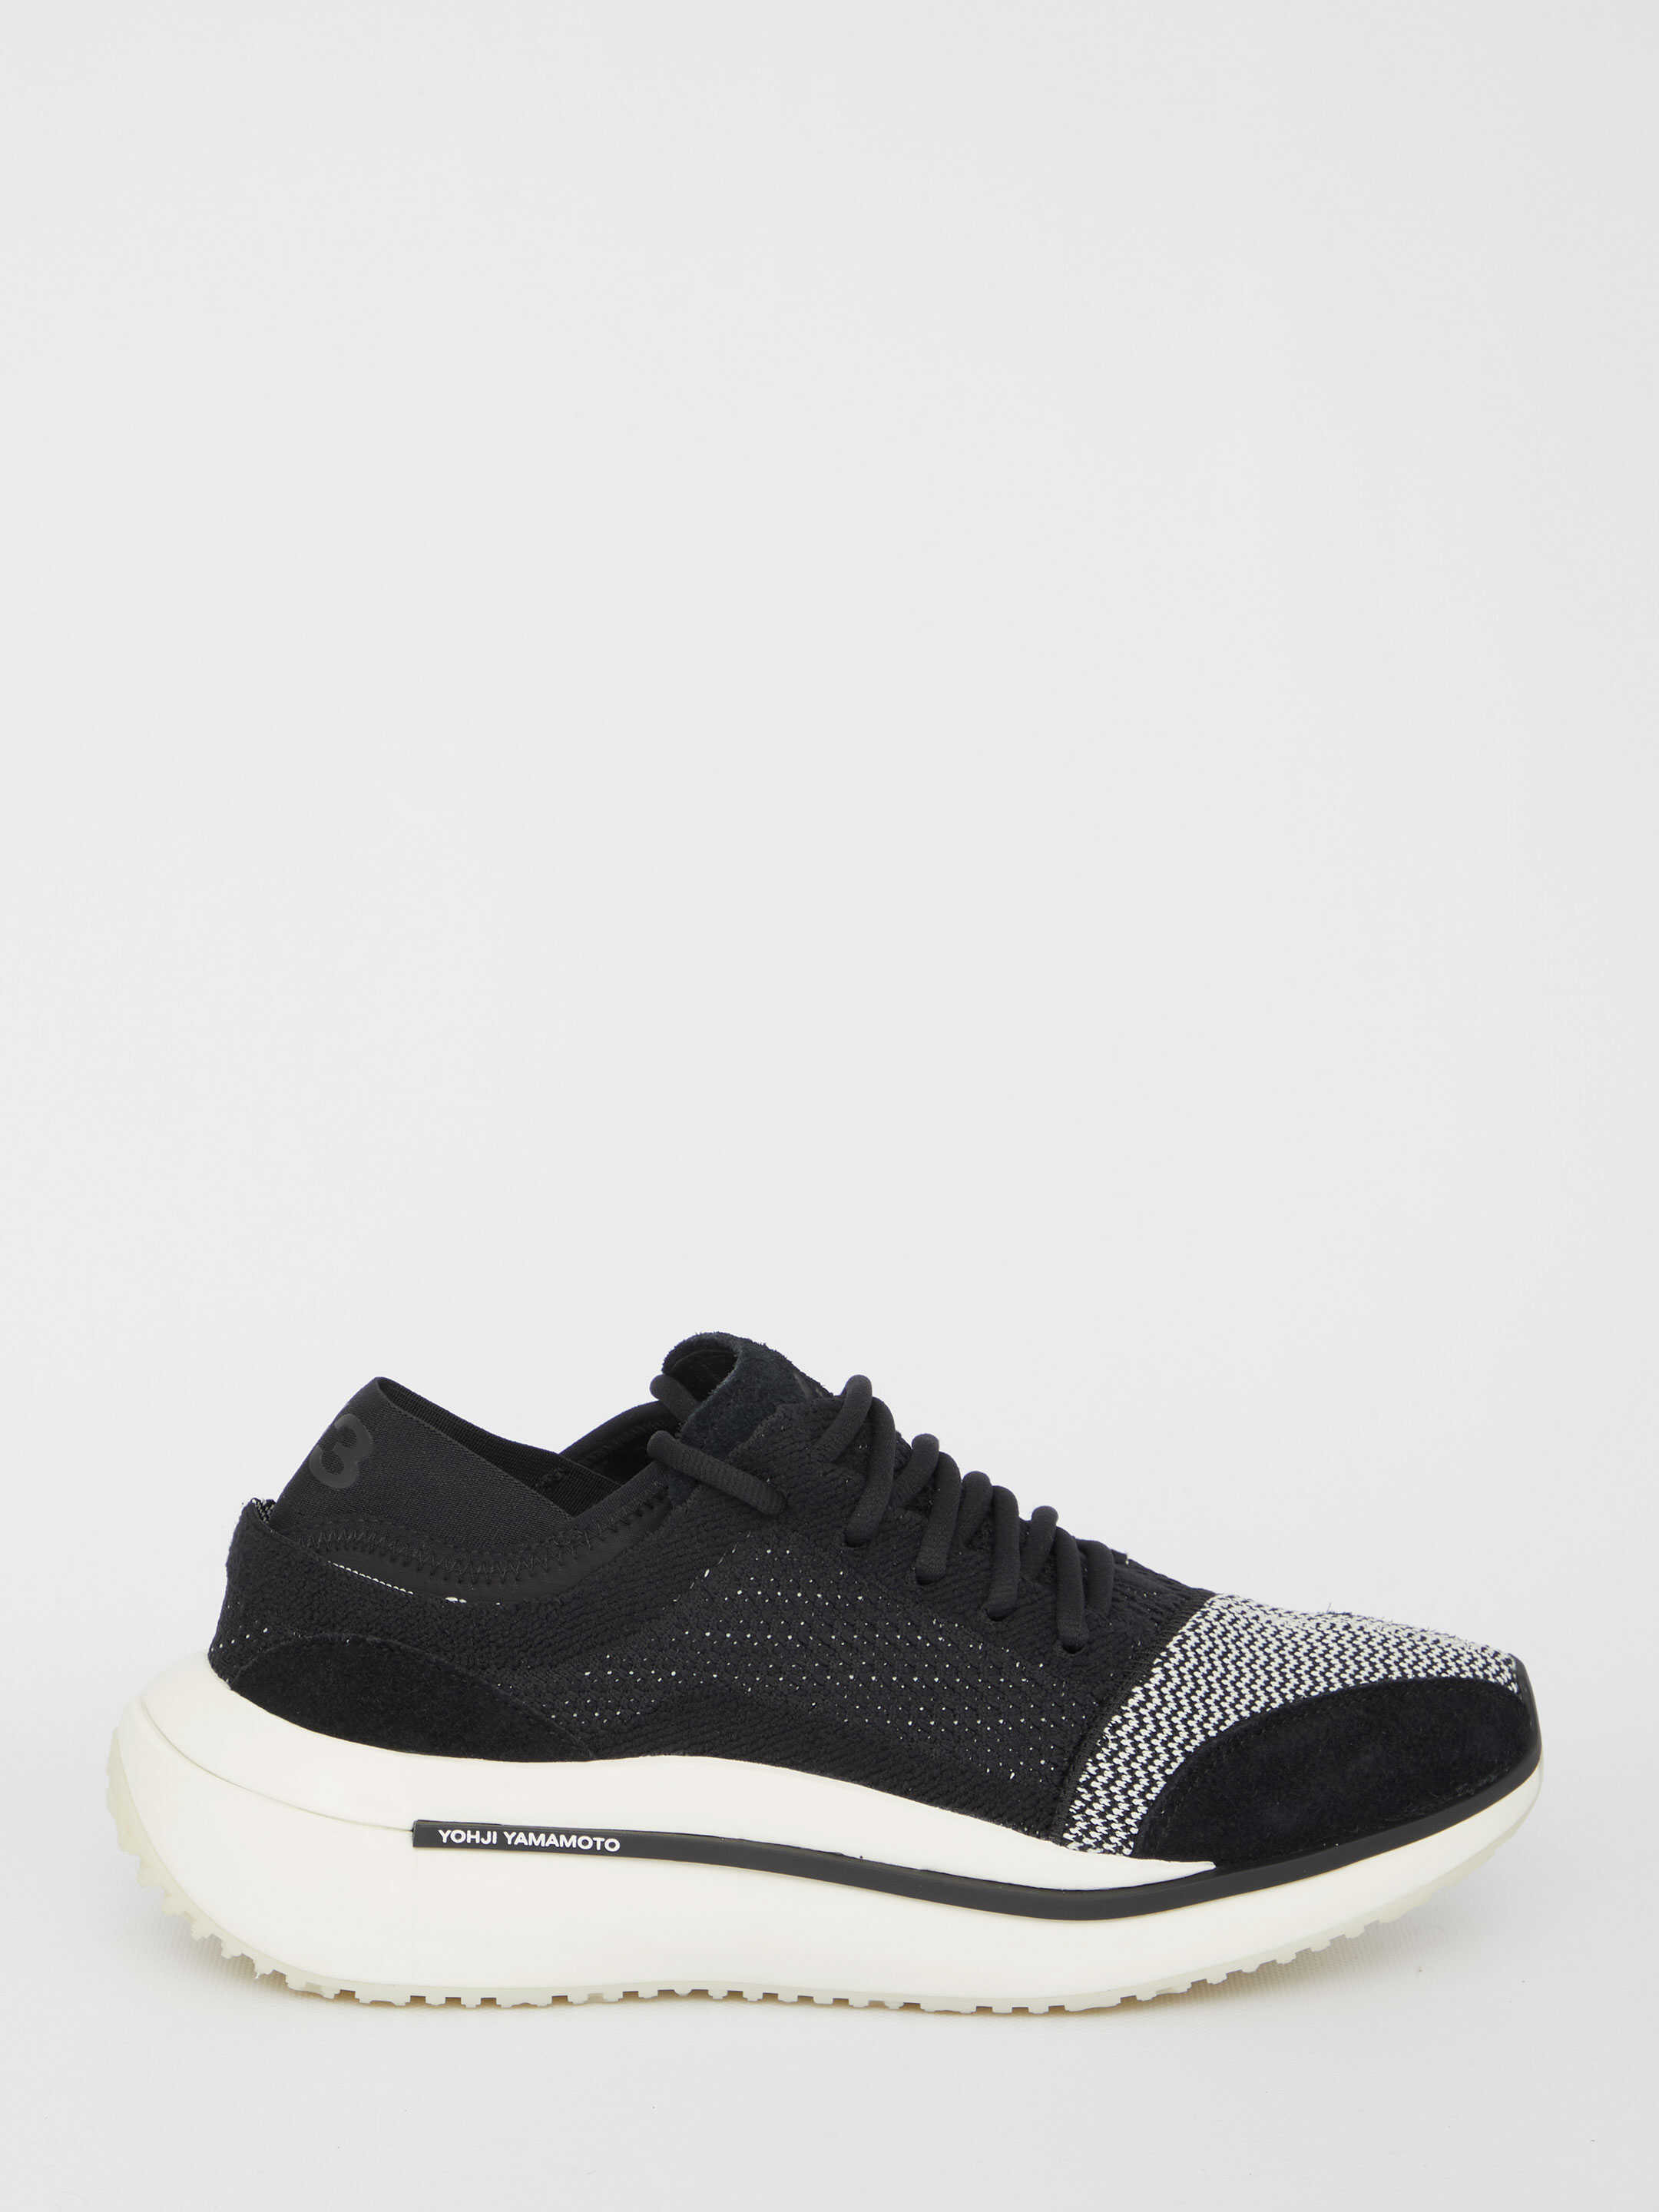 adidas Y-3 by Yohji Yamamoto Qisan Knit Sneakers* BLACK